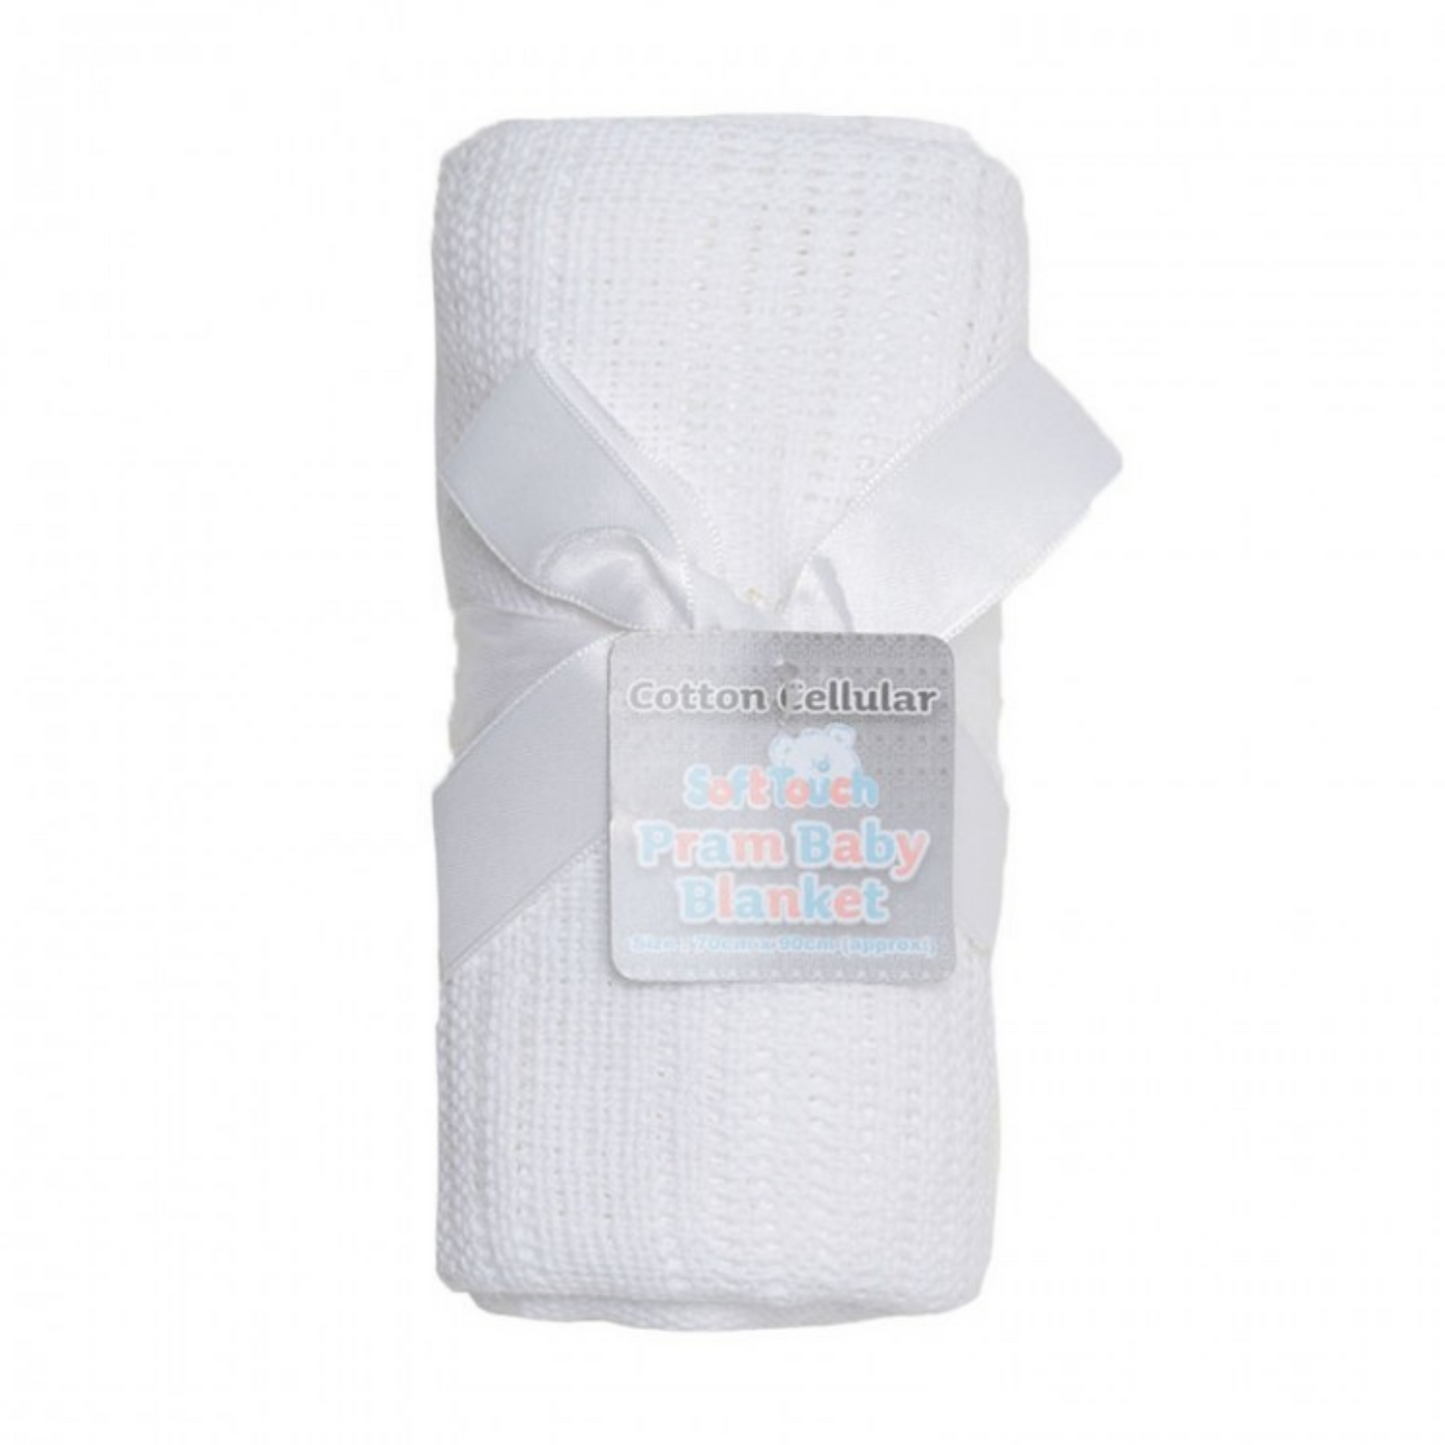 Cotton Cellular Pram Blanket